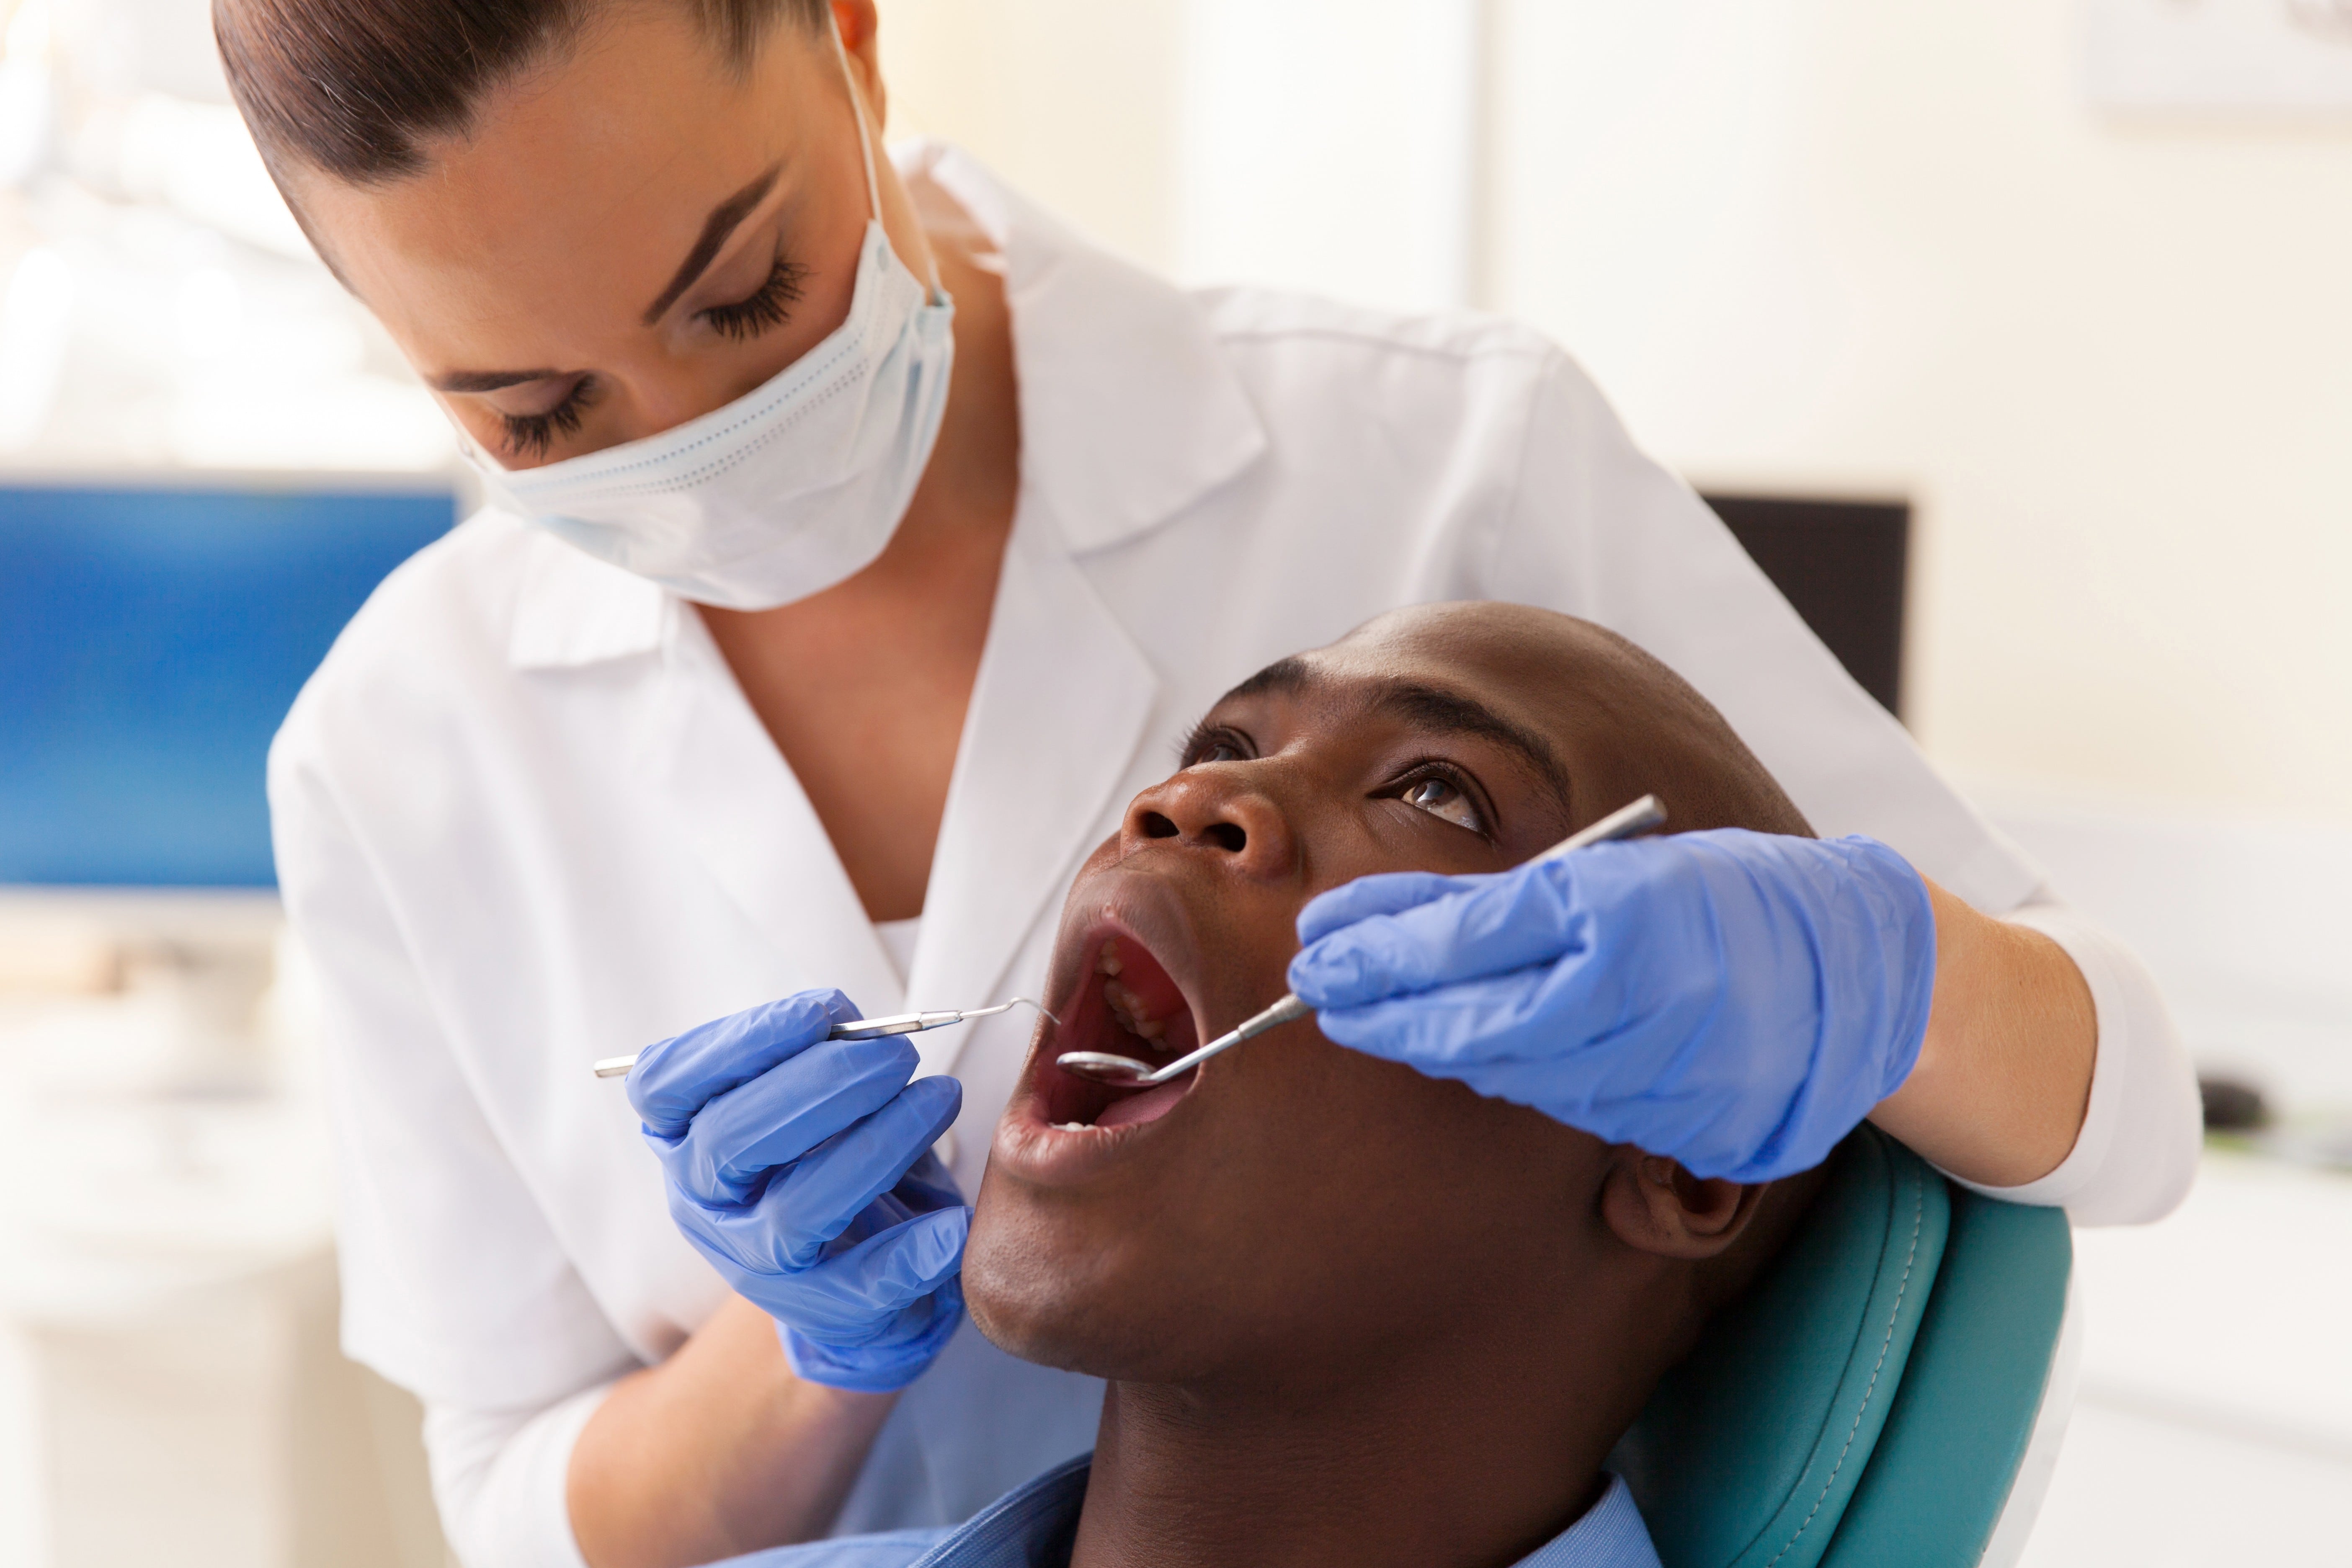 Dentist Examining Male Patient